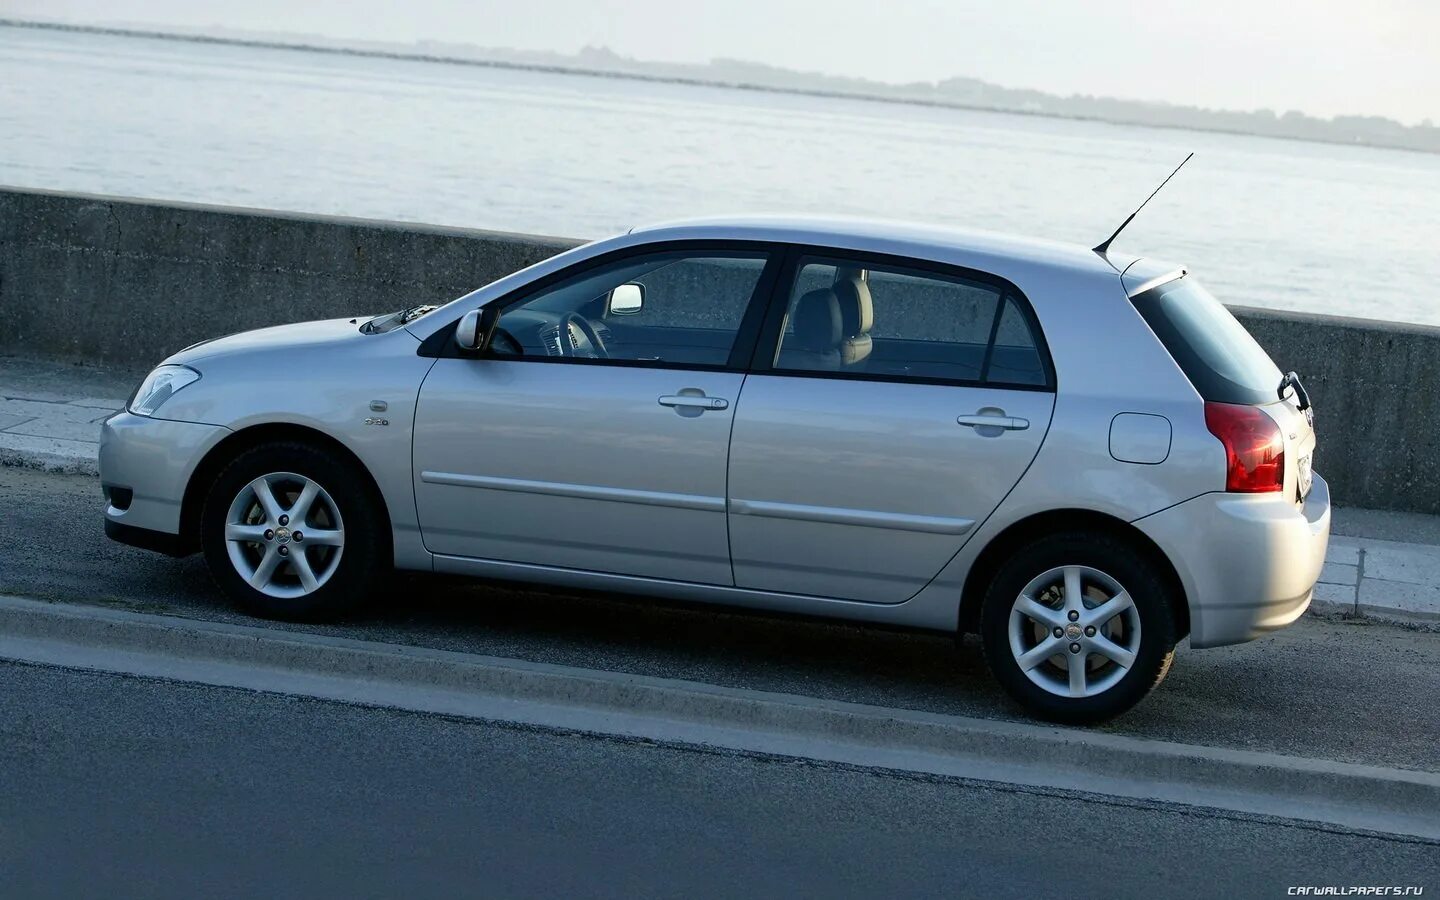 Toyota Corolla 2003 хэтчбек. Тойота каролла 2003 хэчбэк. Тойота Королла 2003 хэтчбек. Тойота Королла хэтчбек 2003 года.